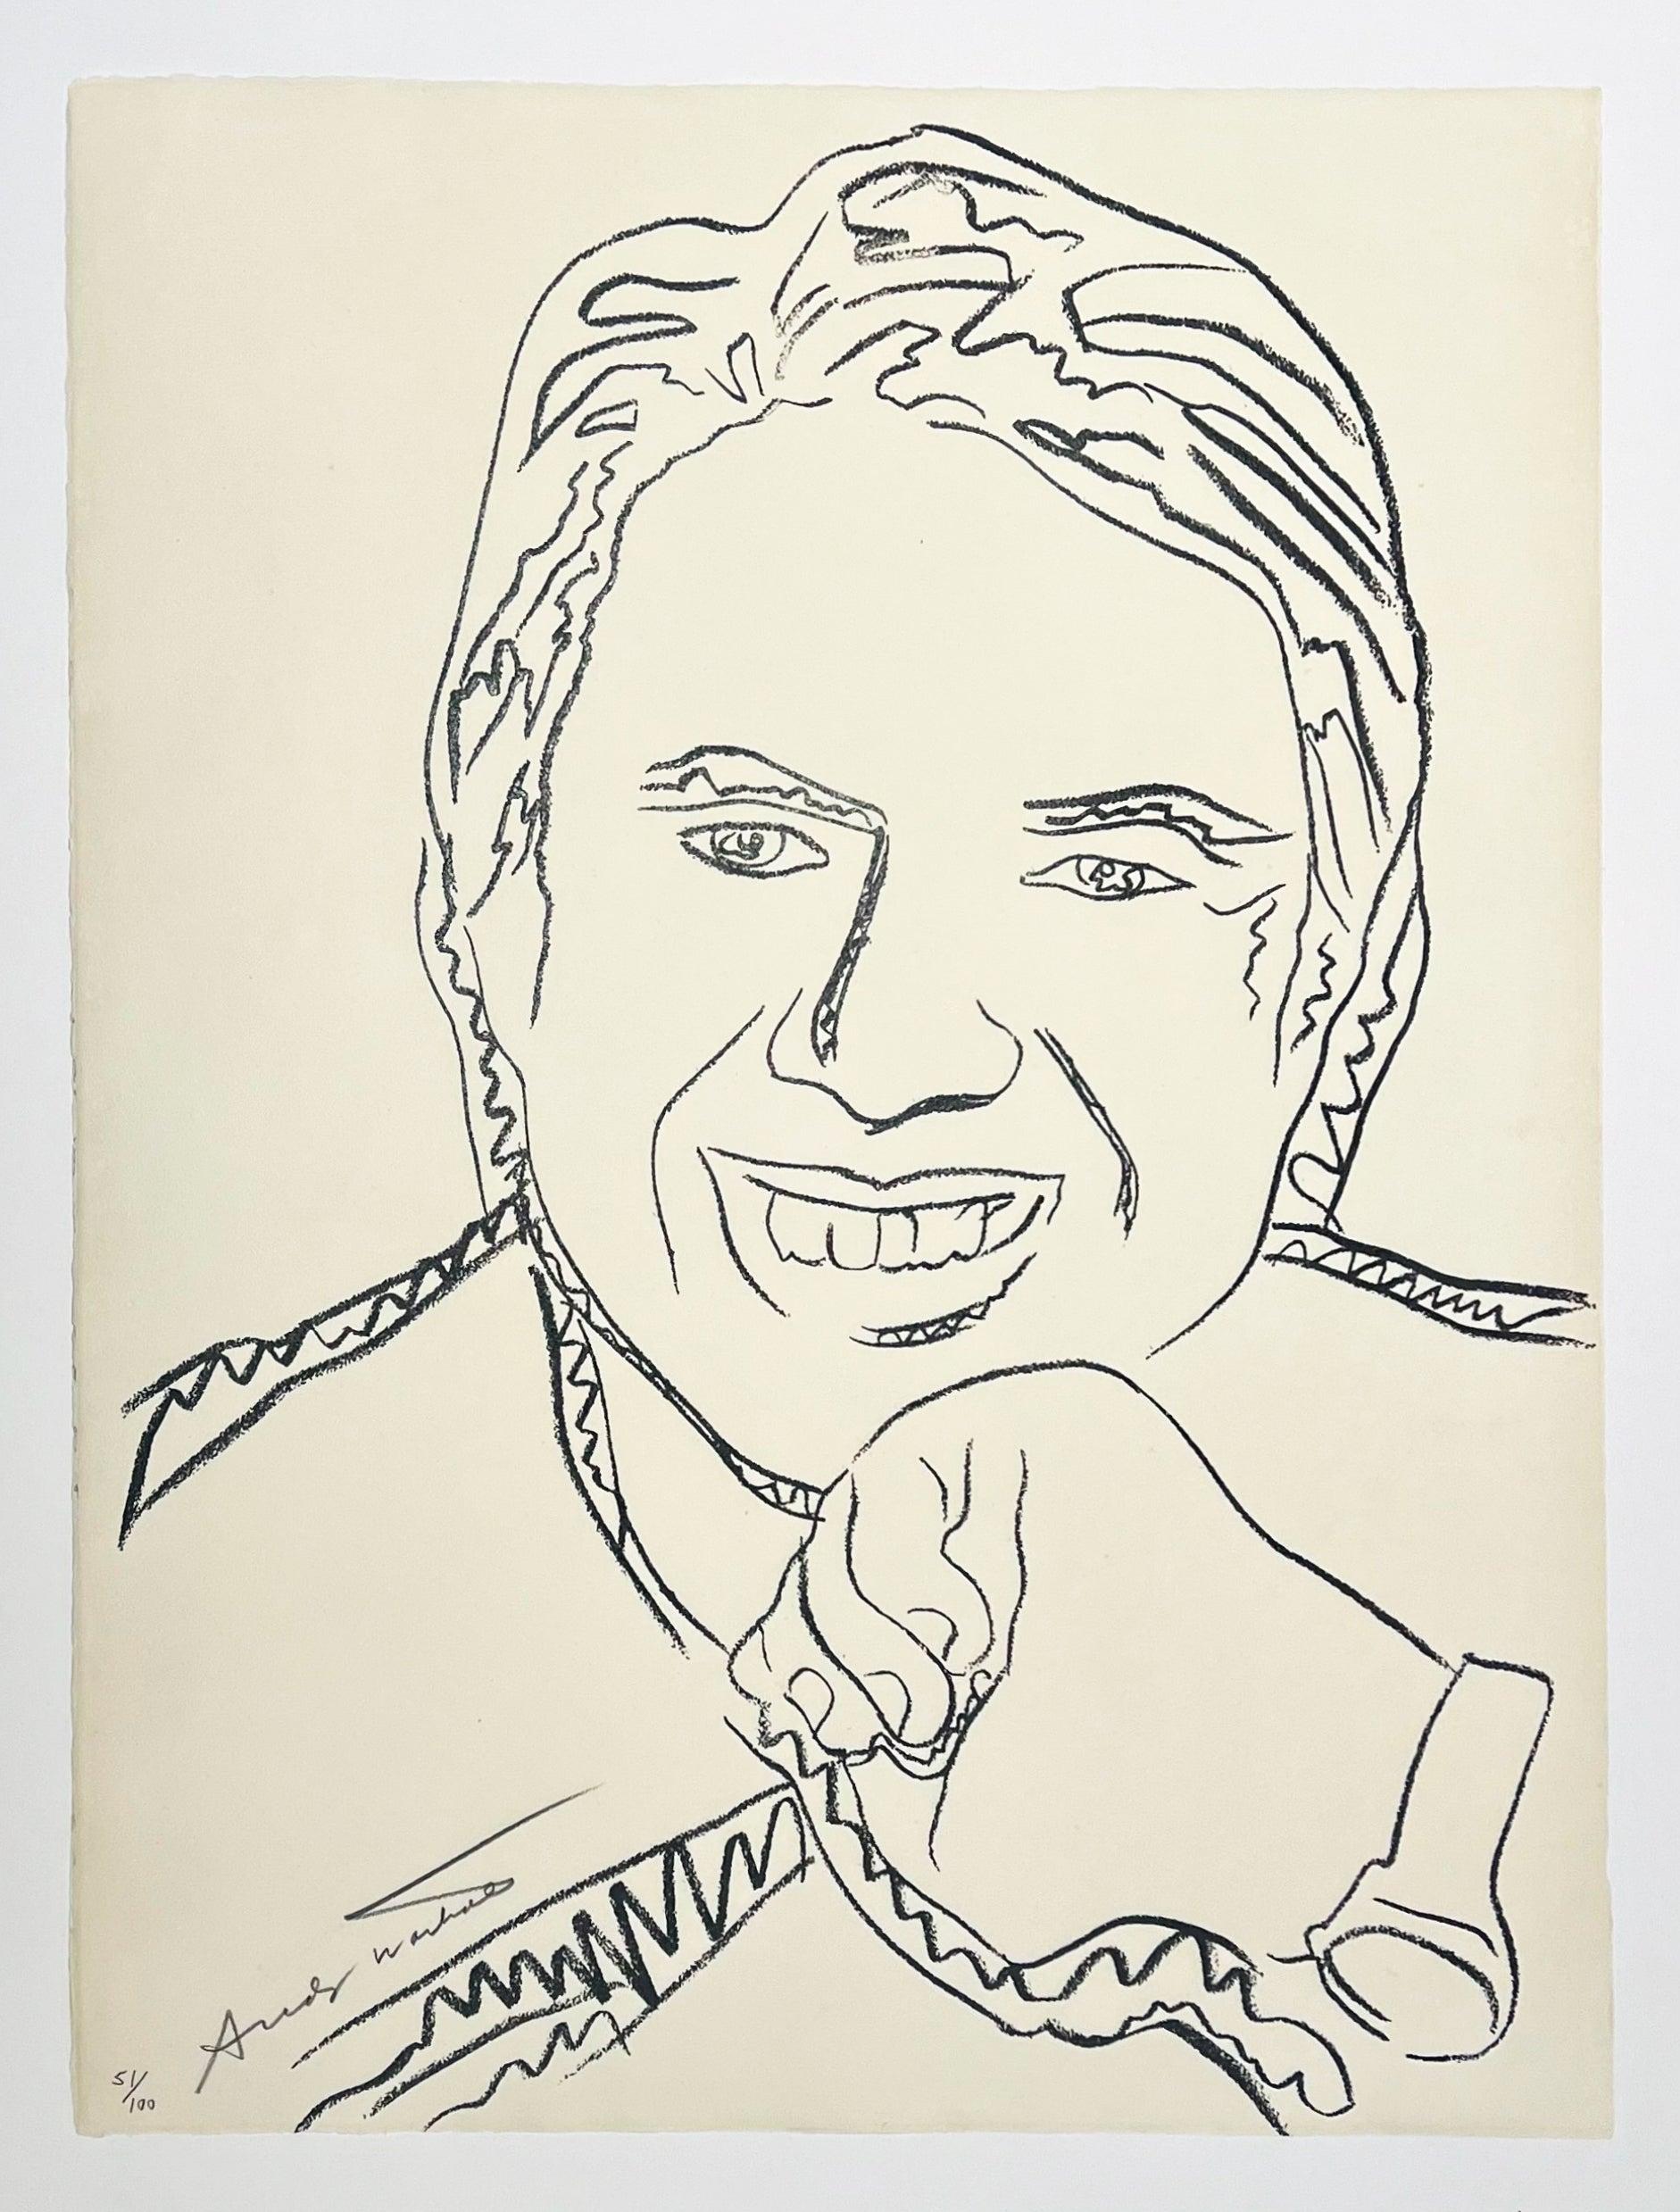 Artist: Andy Warhol
Title: Jimmy Carter III
Portfolio: Inaugural Impressions
Medium: Screenprint on J. Green paper
Date: 1977
Edition: 51/100
Frame Size: 36 1/2